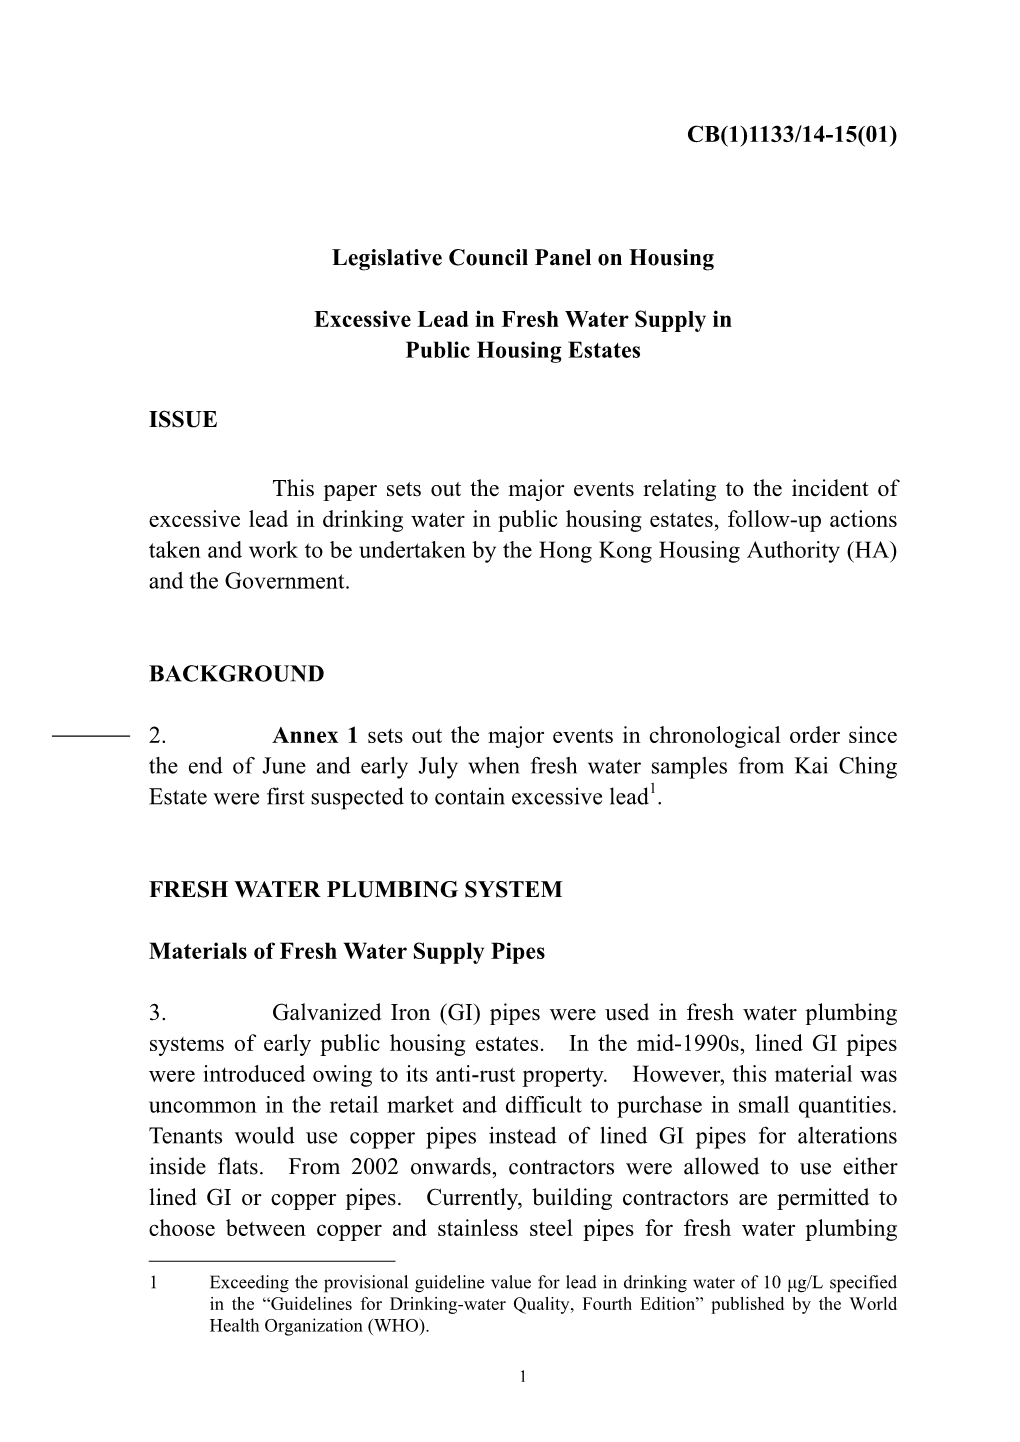 1133/14-15(01) Legislative Council Panel on Housing Excessive Lead